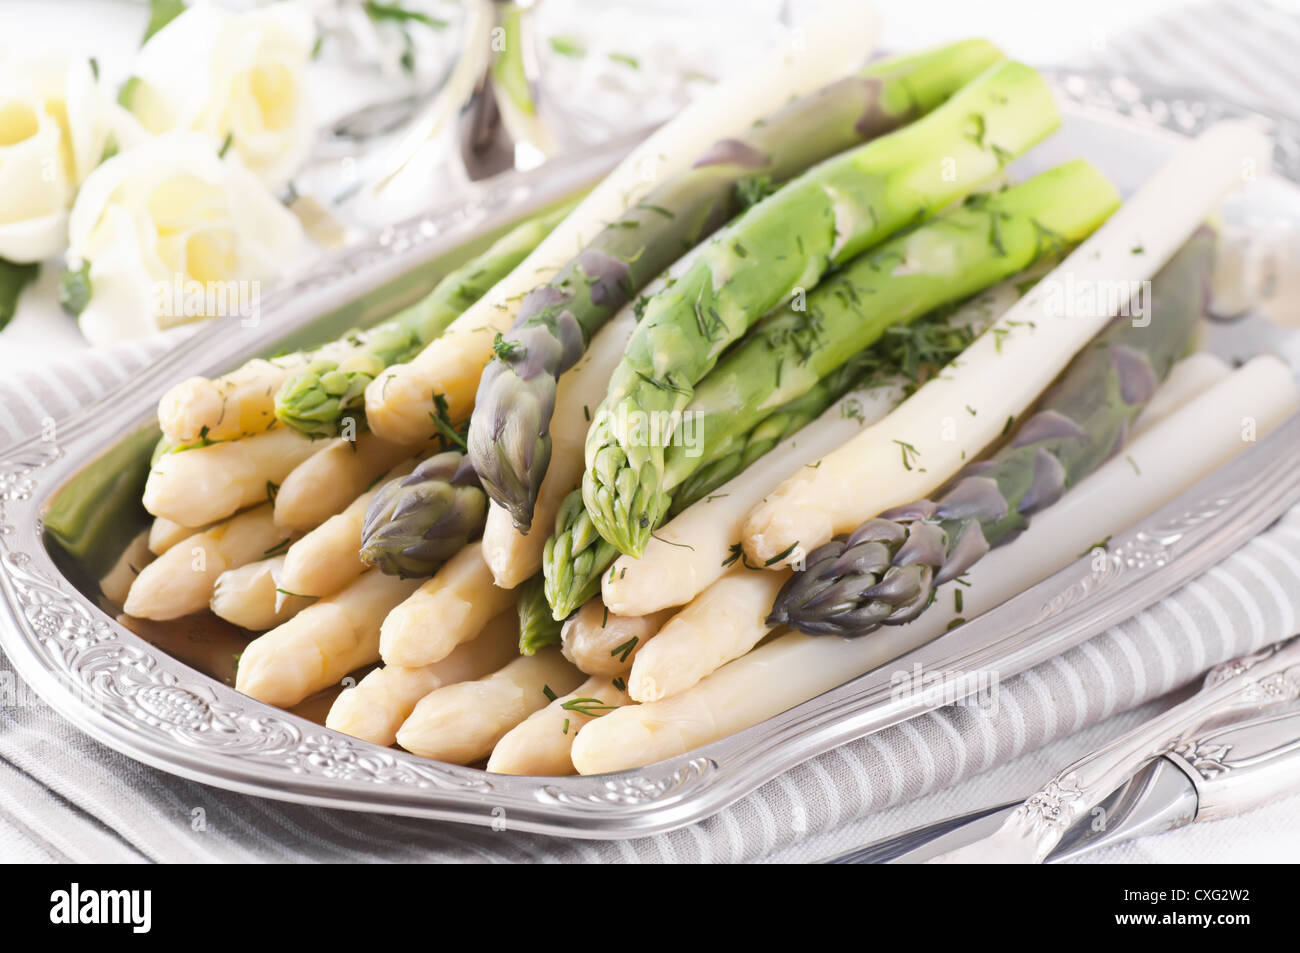 Asparagus on silver tray Stock Photo